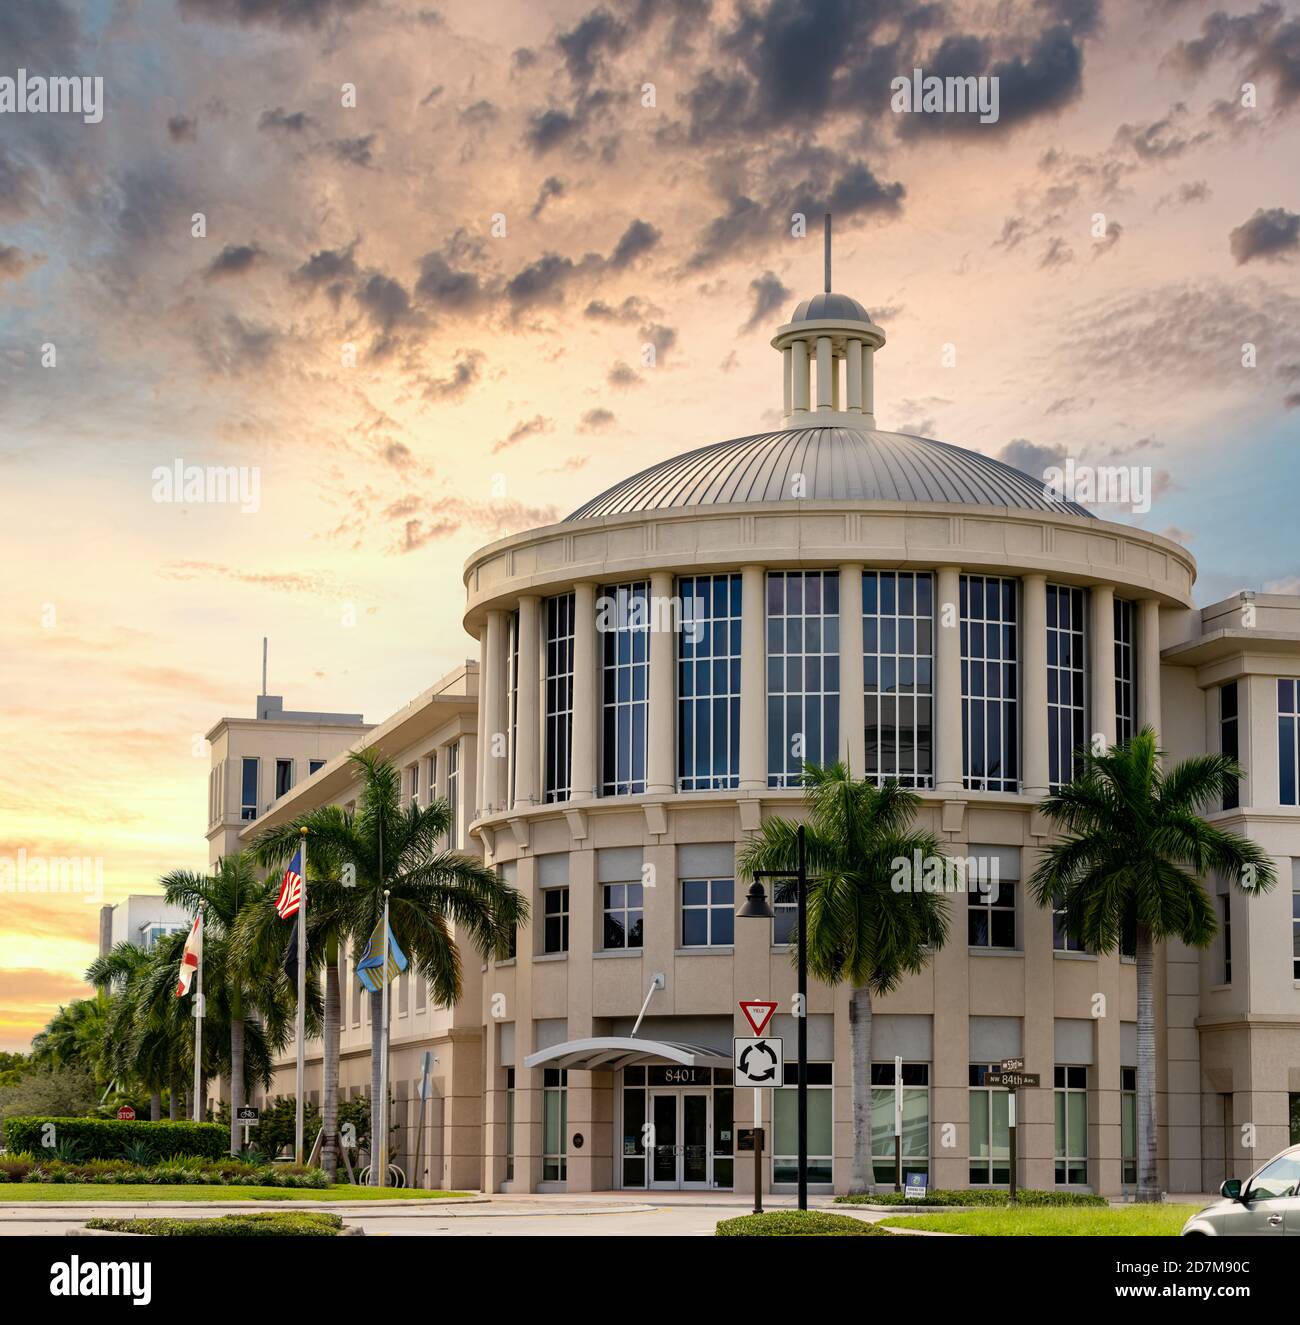 Doral City Hall Building Miami FL photo Banque D'Images